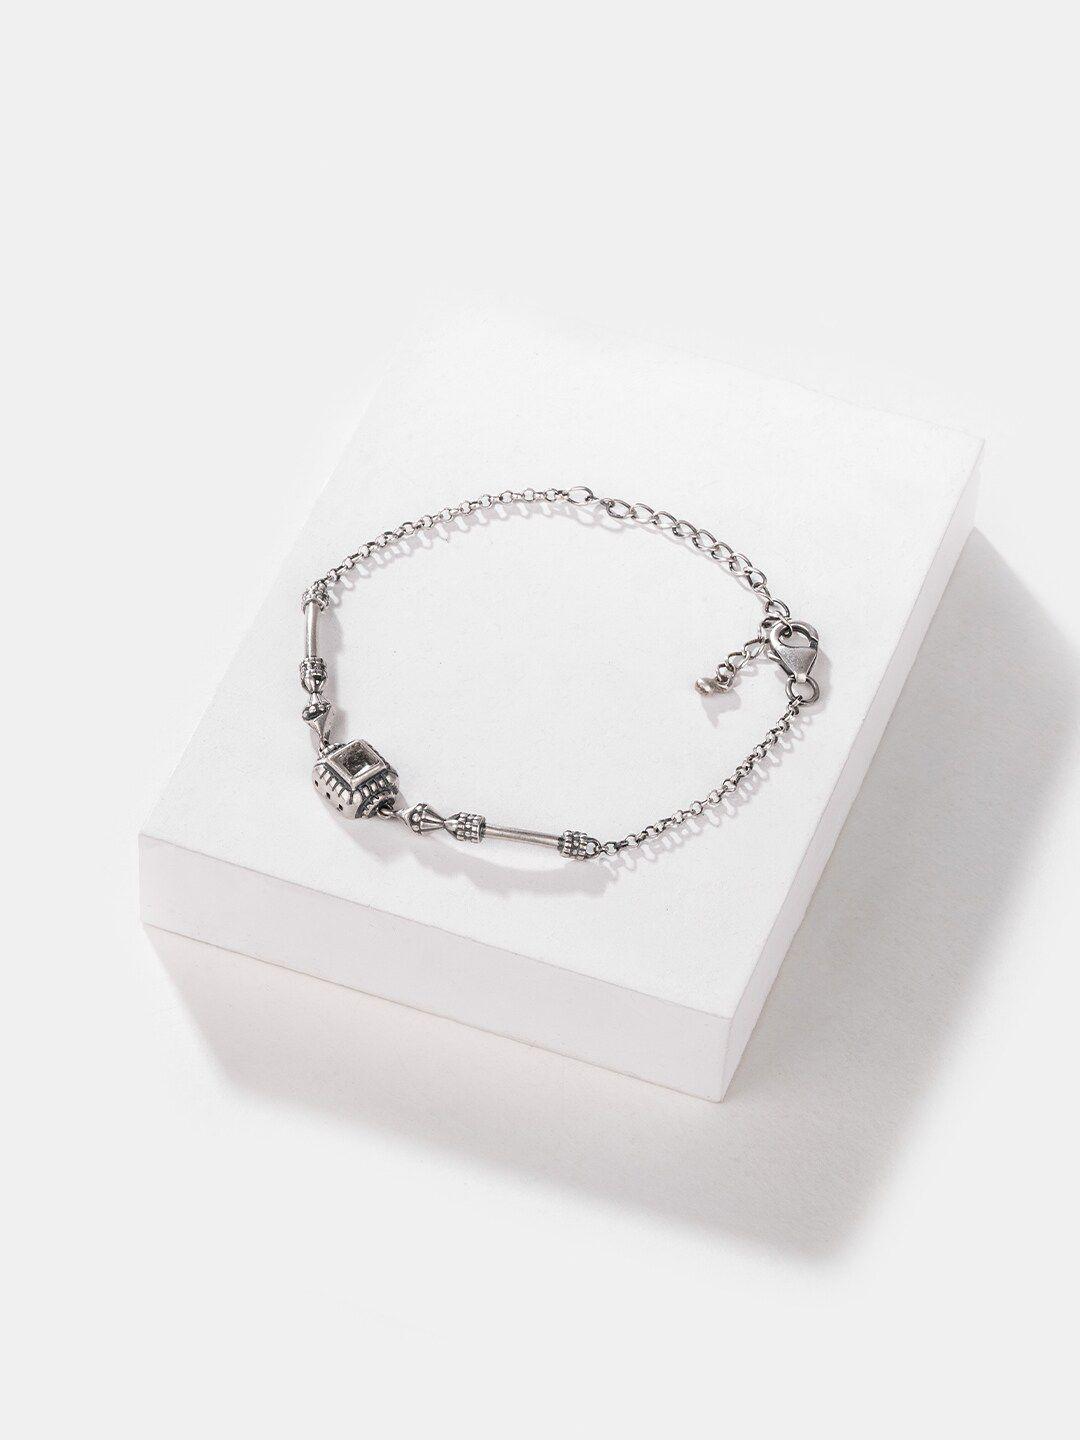 shaya women 925 sterling silver link bracelet